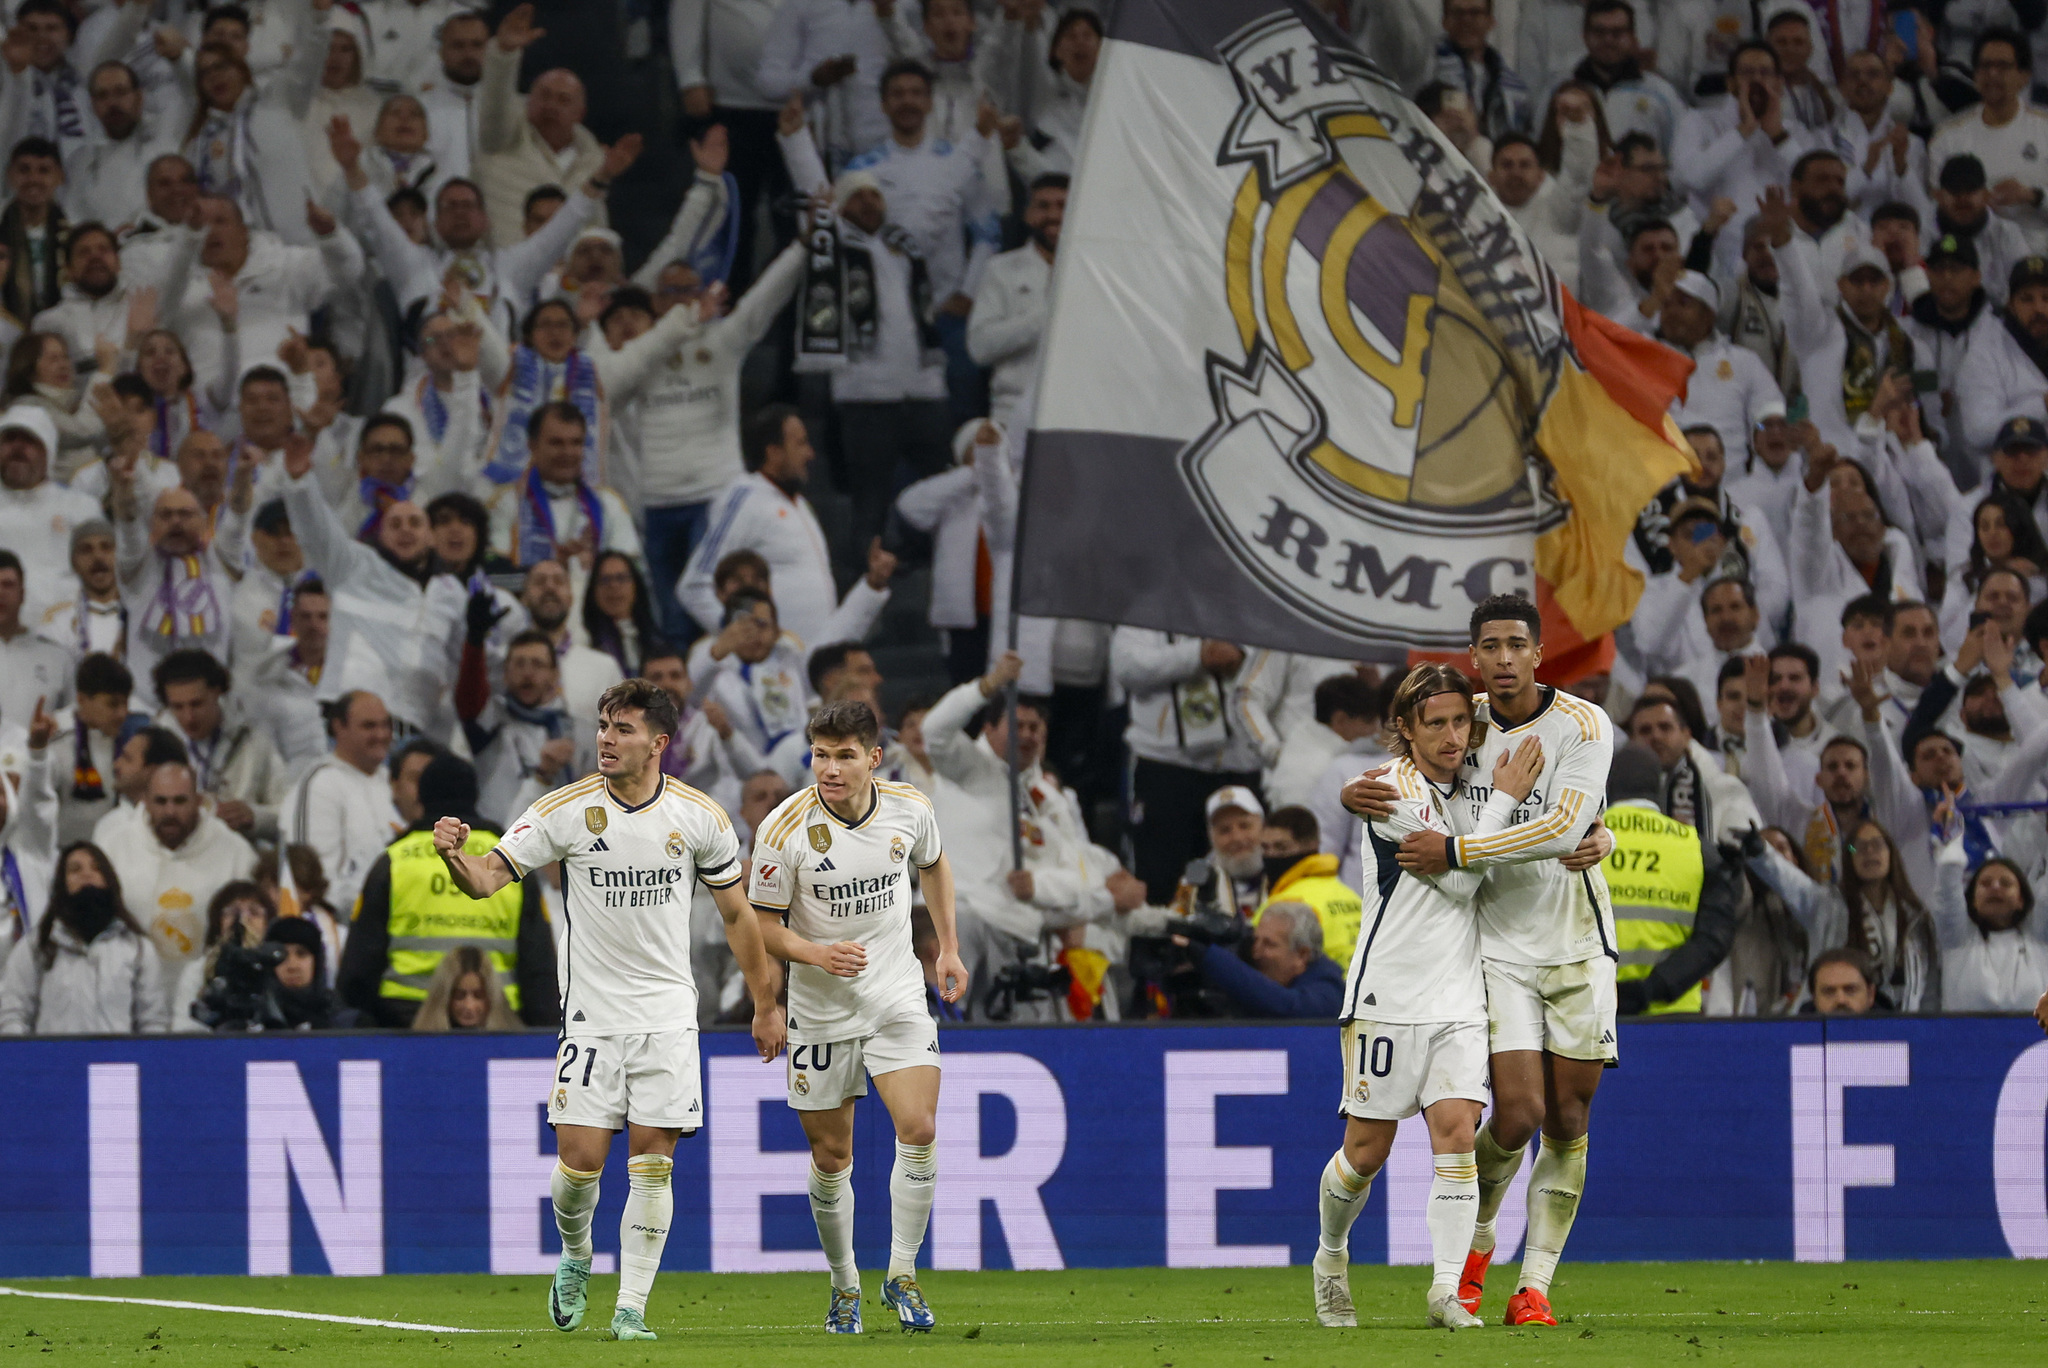 Real Madrid celebrate after scoring against Villarreal